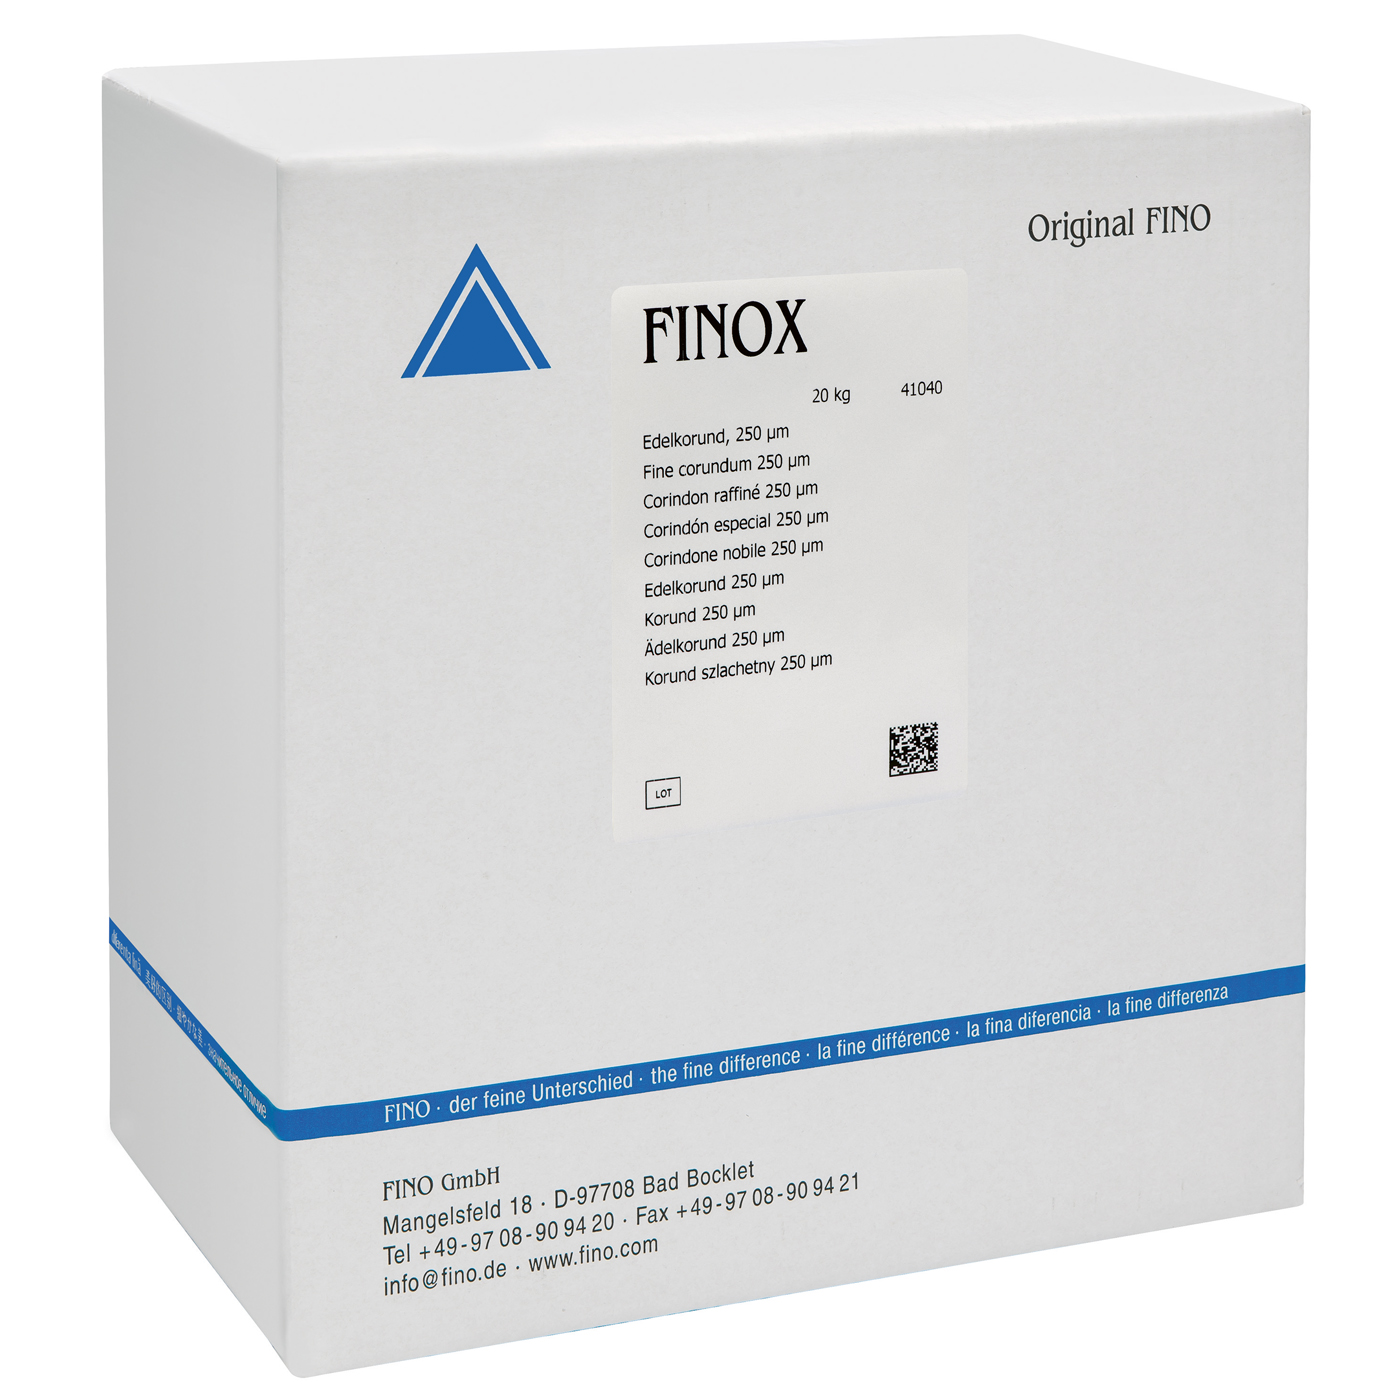 FINOX High-Grade Corundum, 250 µm - 20 kg